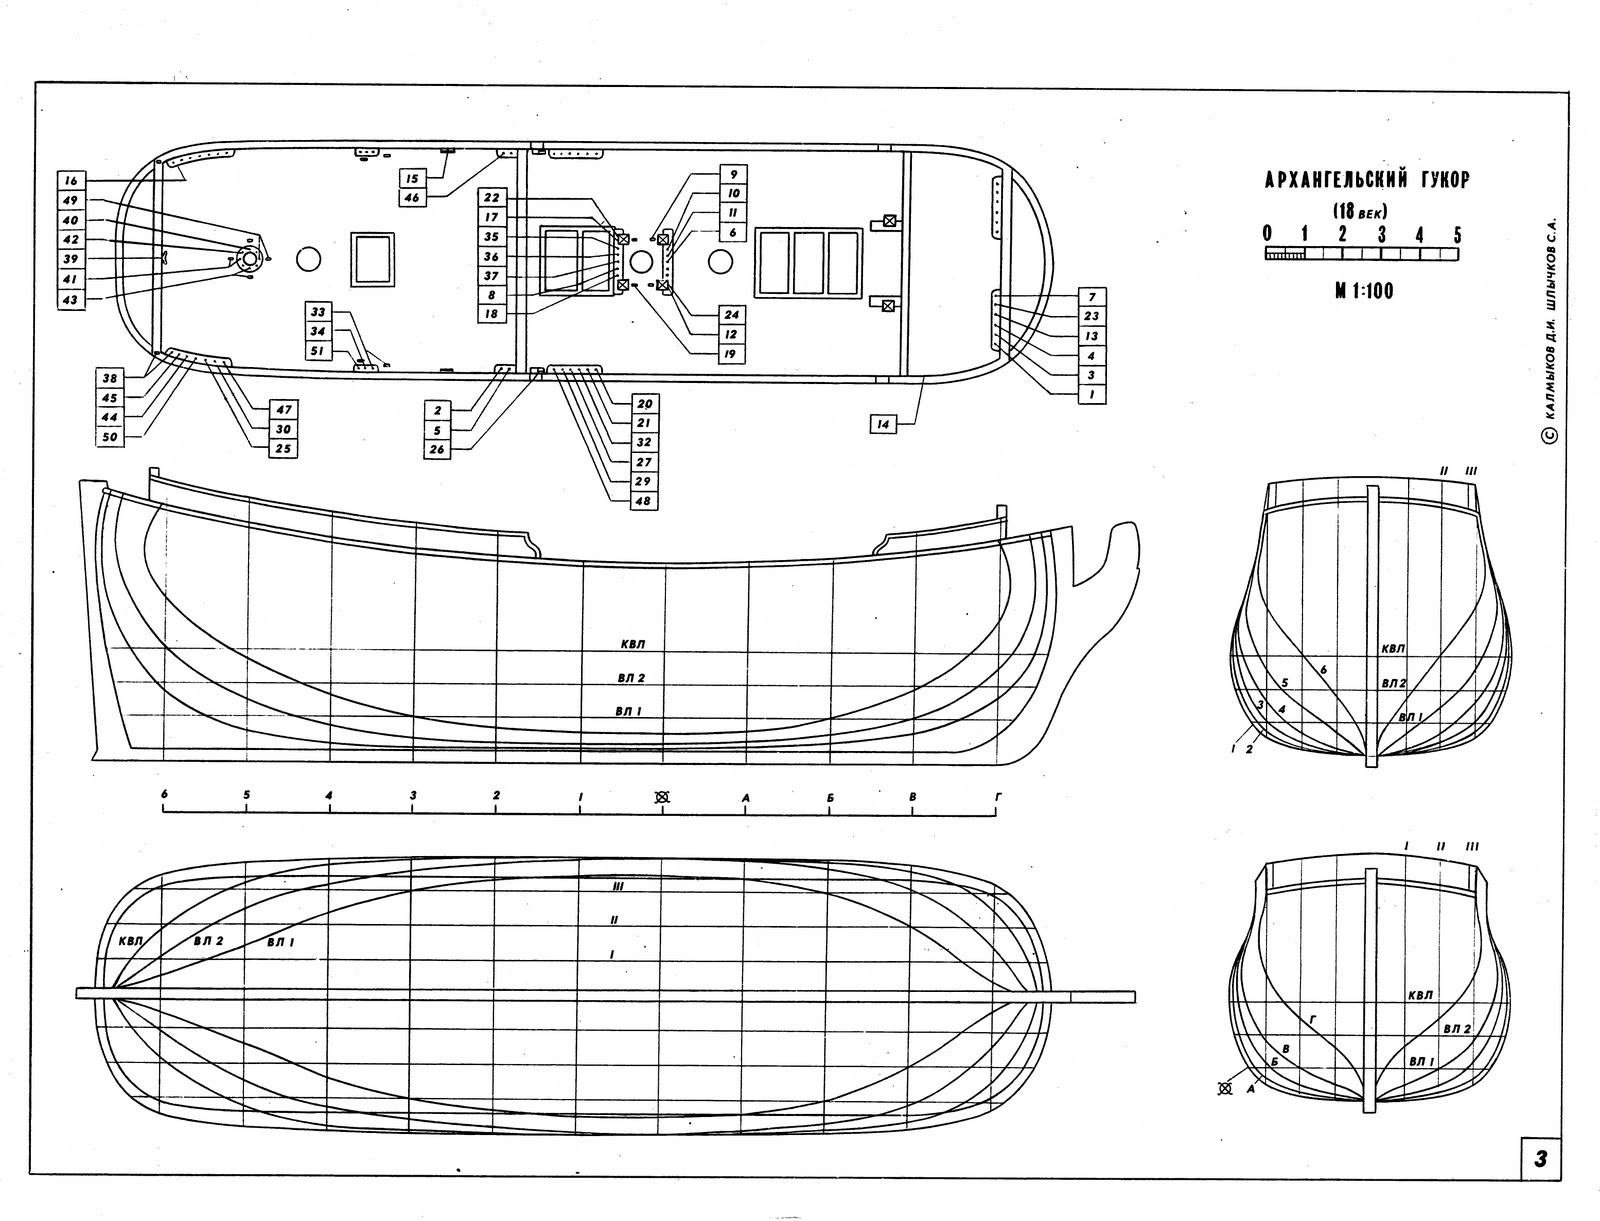 Model Ship Plans How To Build DIY PDF Download UK Australia Boat